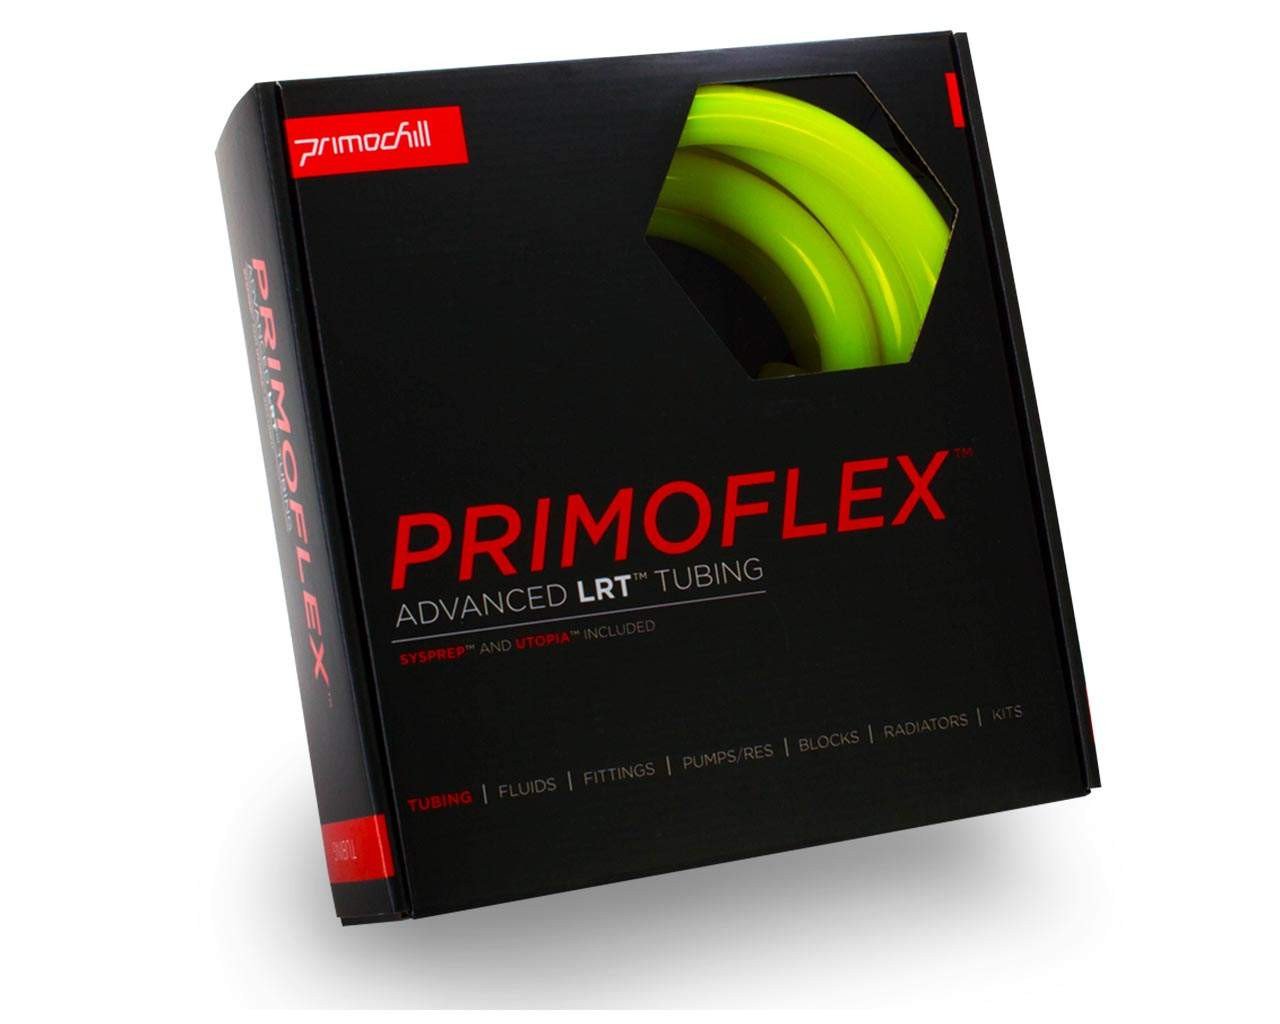 PrimoFlex Advanced LRT Soft Flexible Tubing - 7/16in.ID x 5/8in.OD, 10 feet - PrimoChill - KEEPING IT COOL Pearl UV Yellow